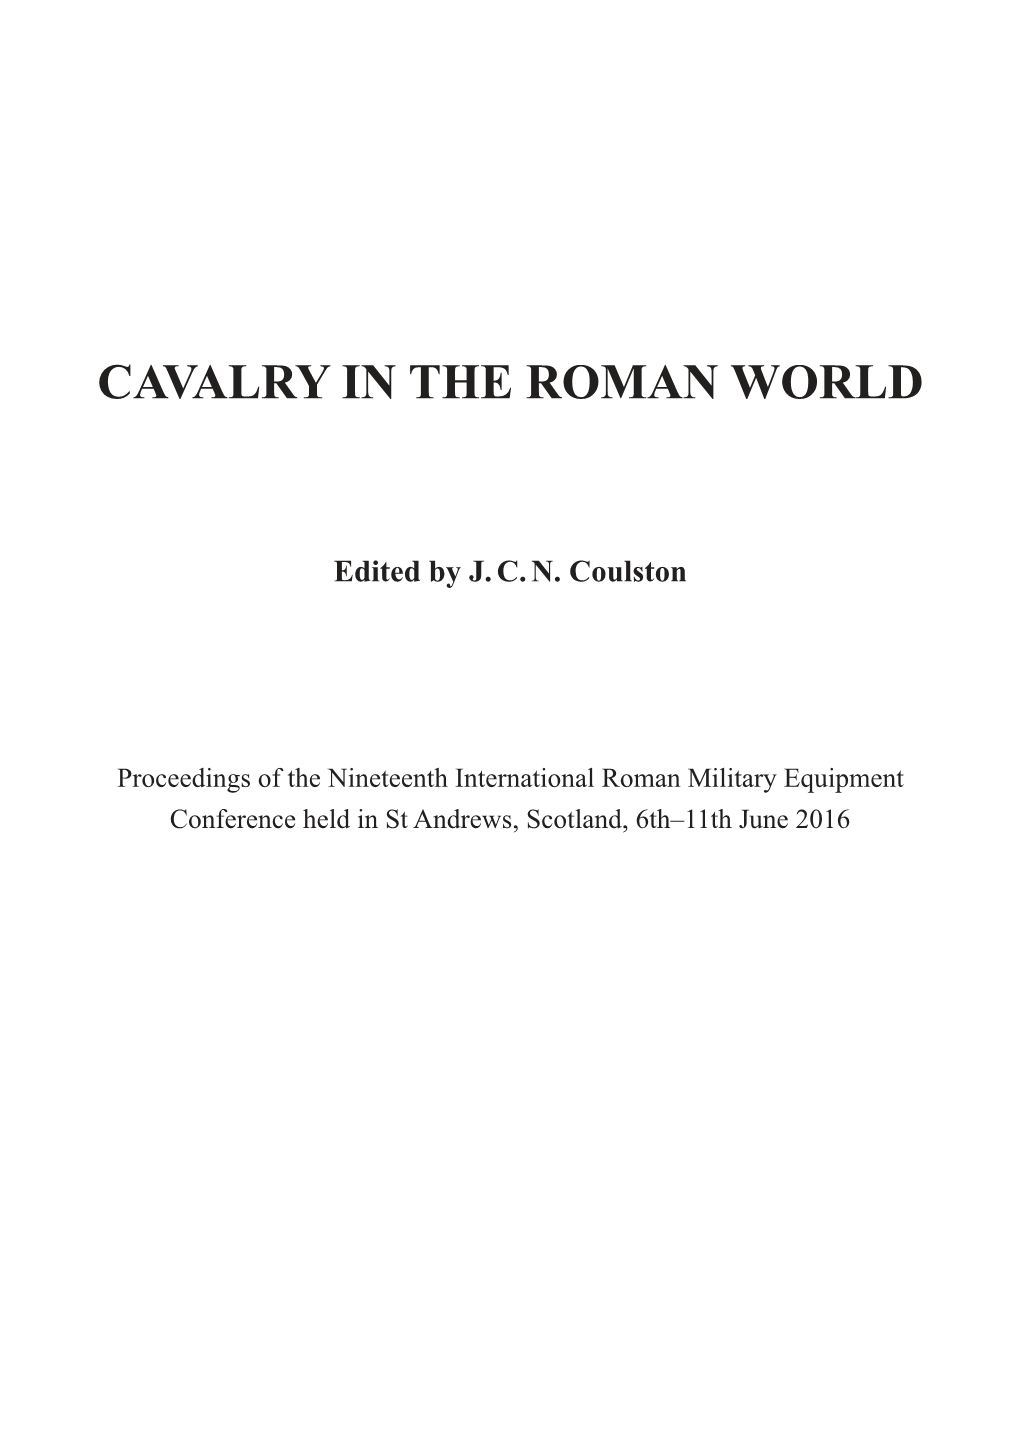 JRMES 19 2018, 163–175 166 Journal of Roman Military Equipment Studies 19 2018